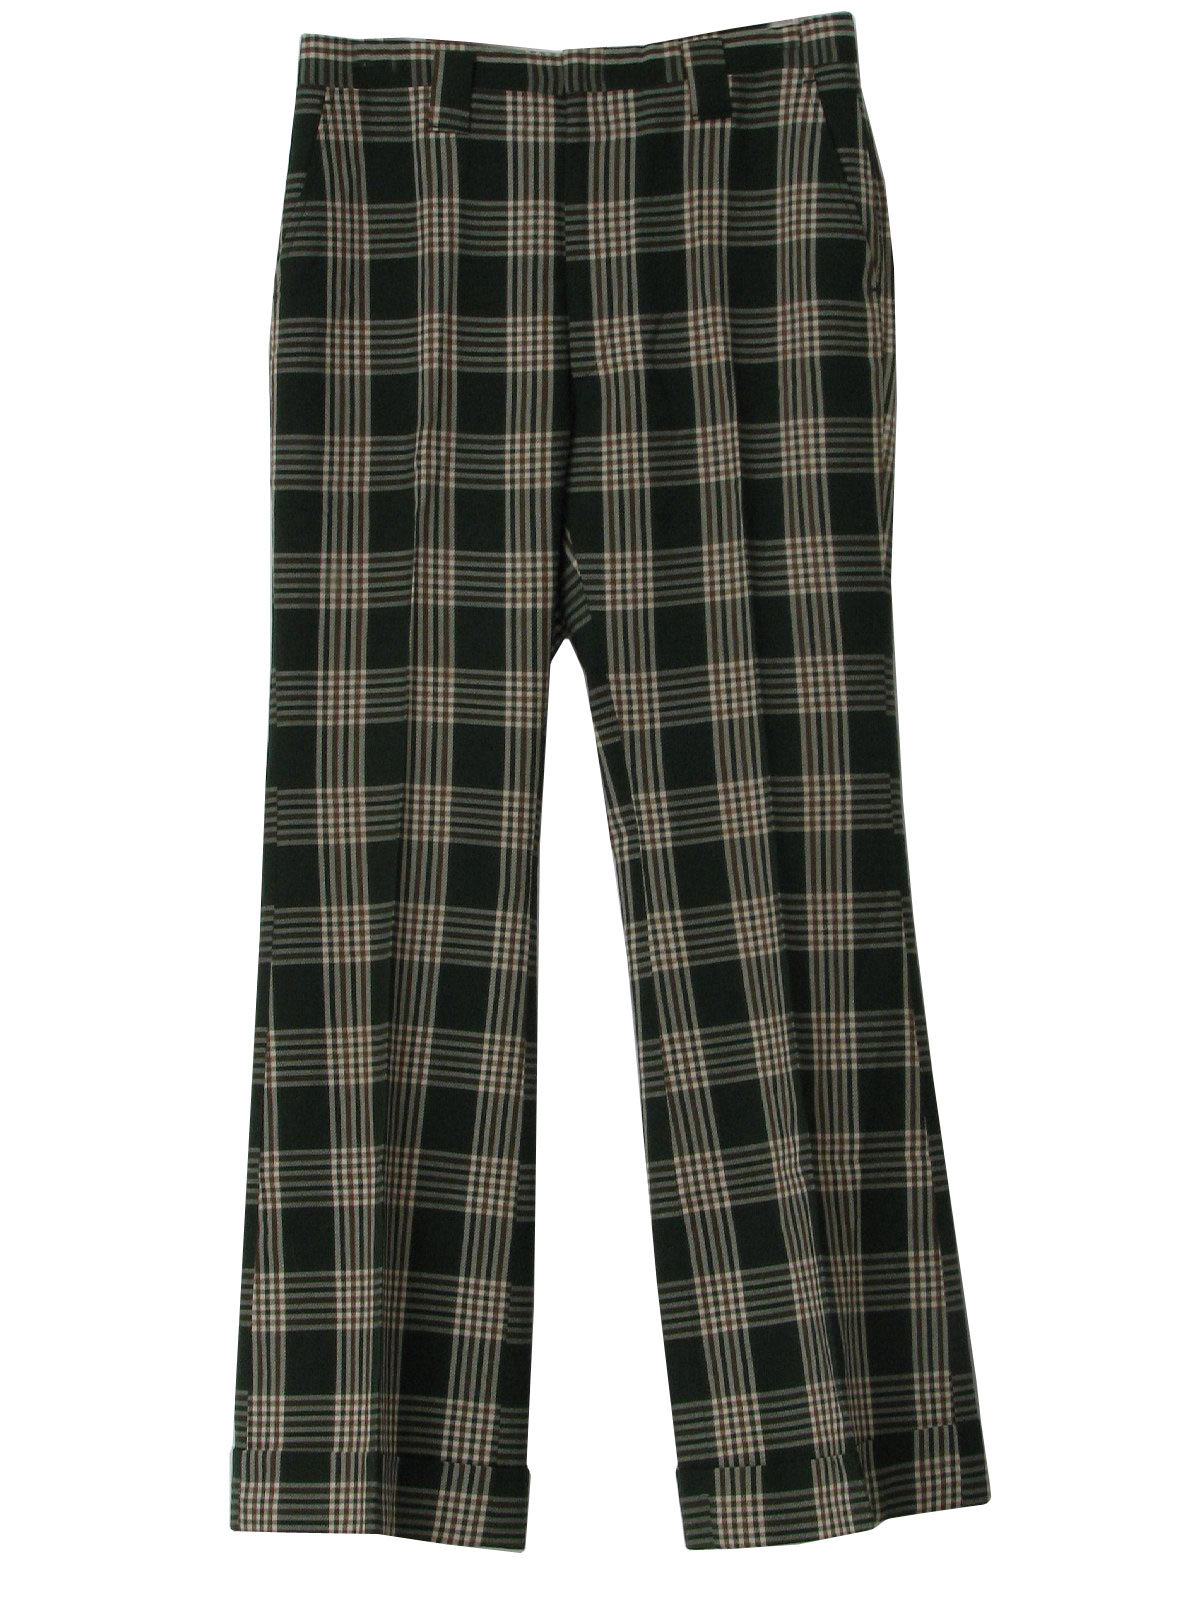 Vintage 1970's Flared Pants / Flares: 70s -No label- Mens forest green ...